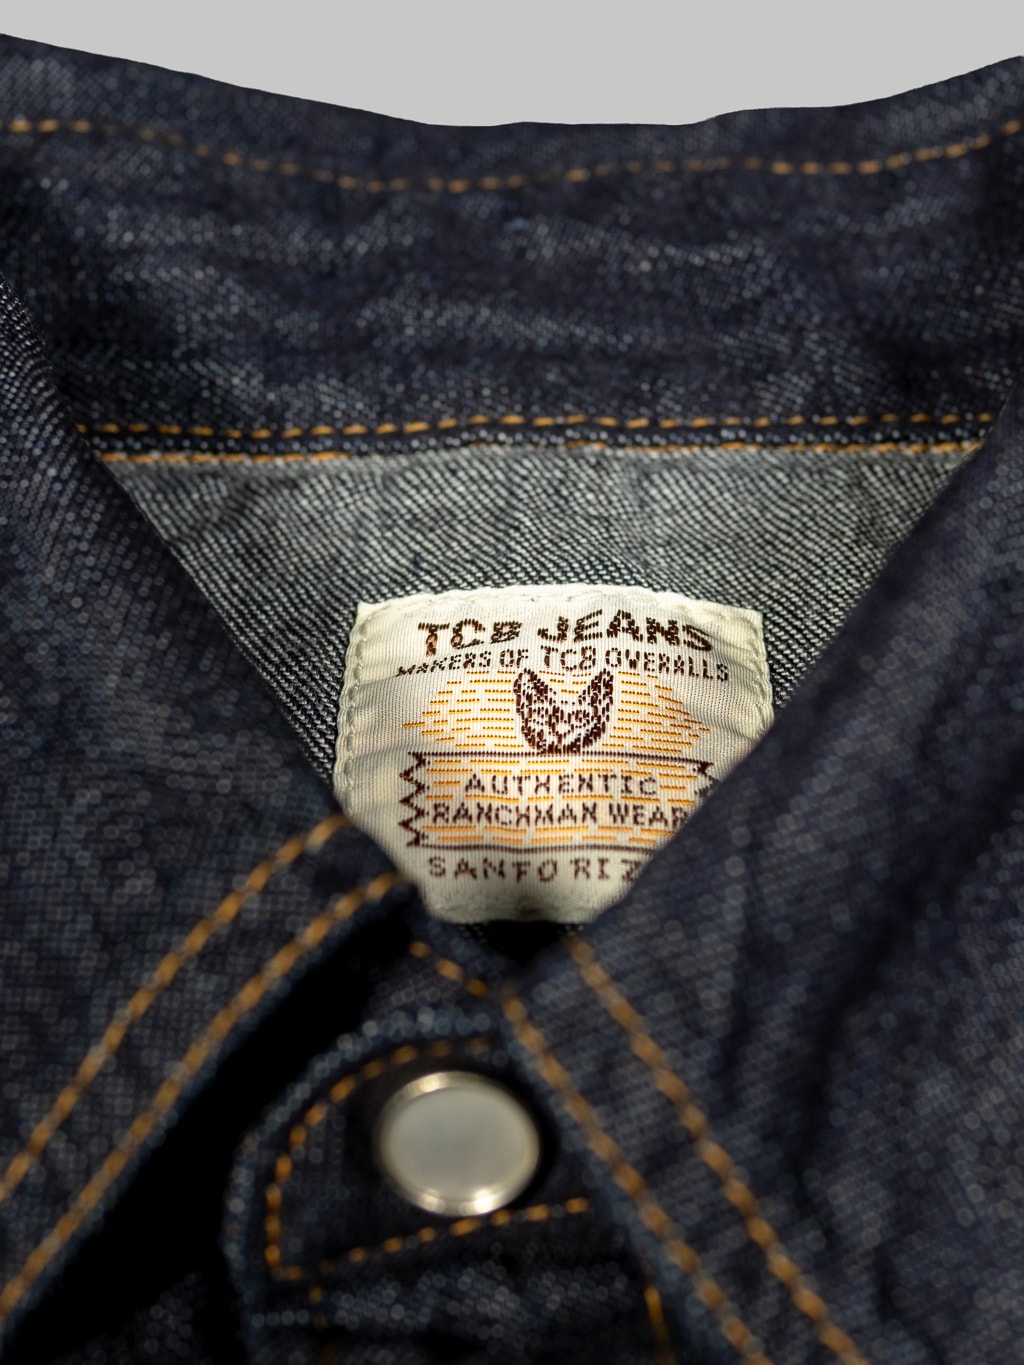 tcb jeans ranchman selvedge denim shirt collar closeup